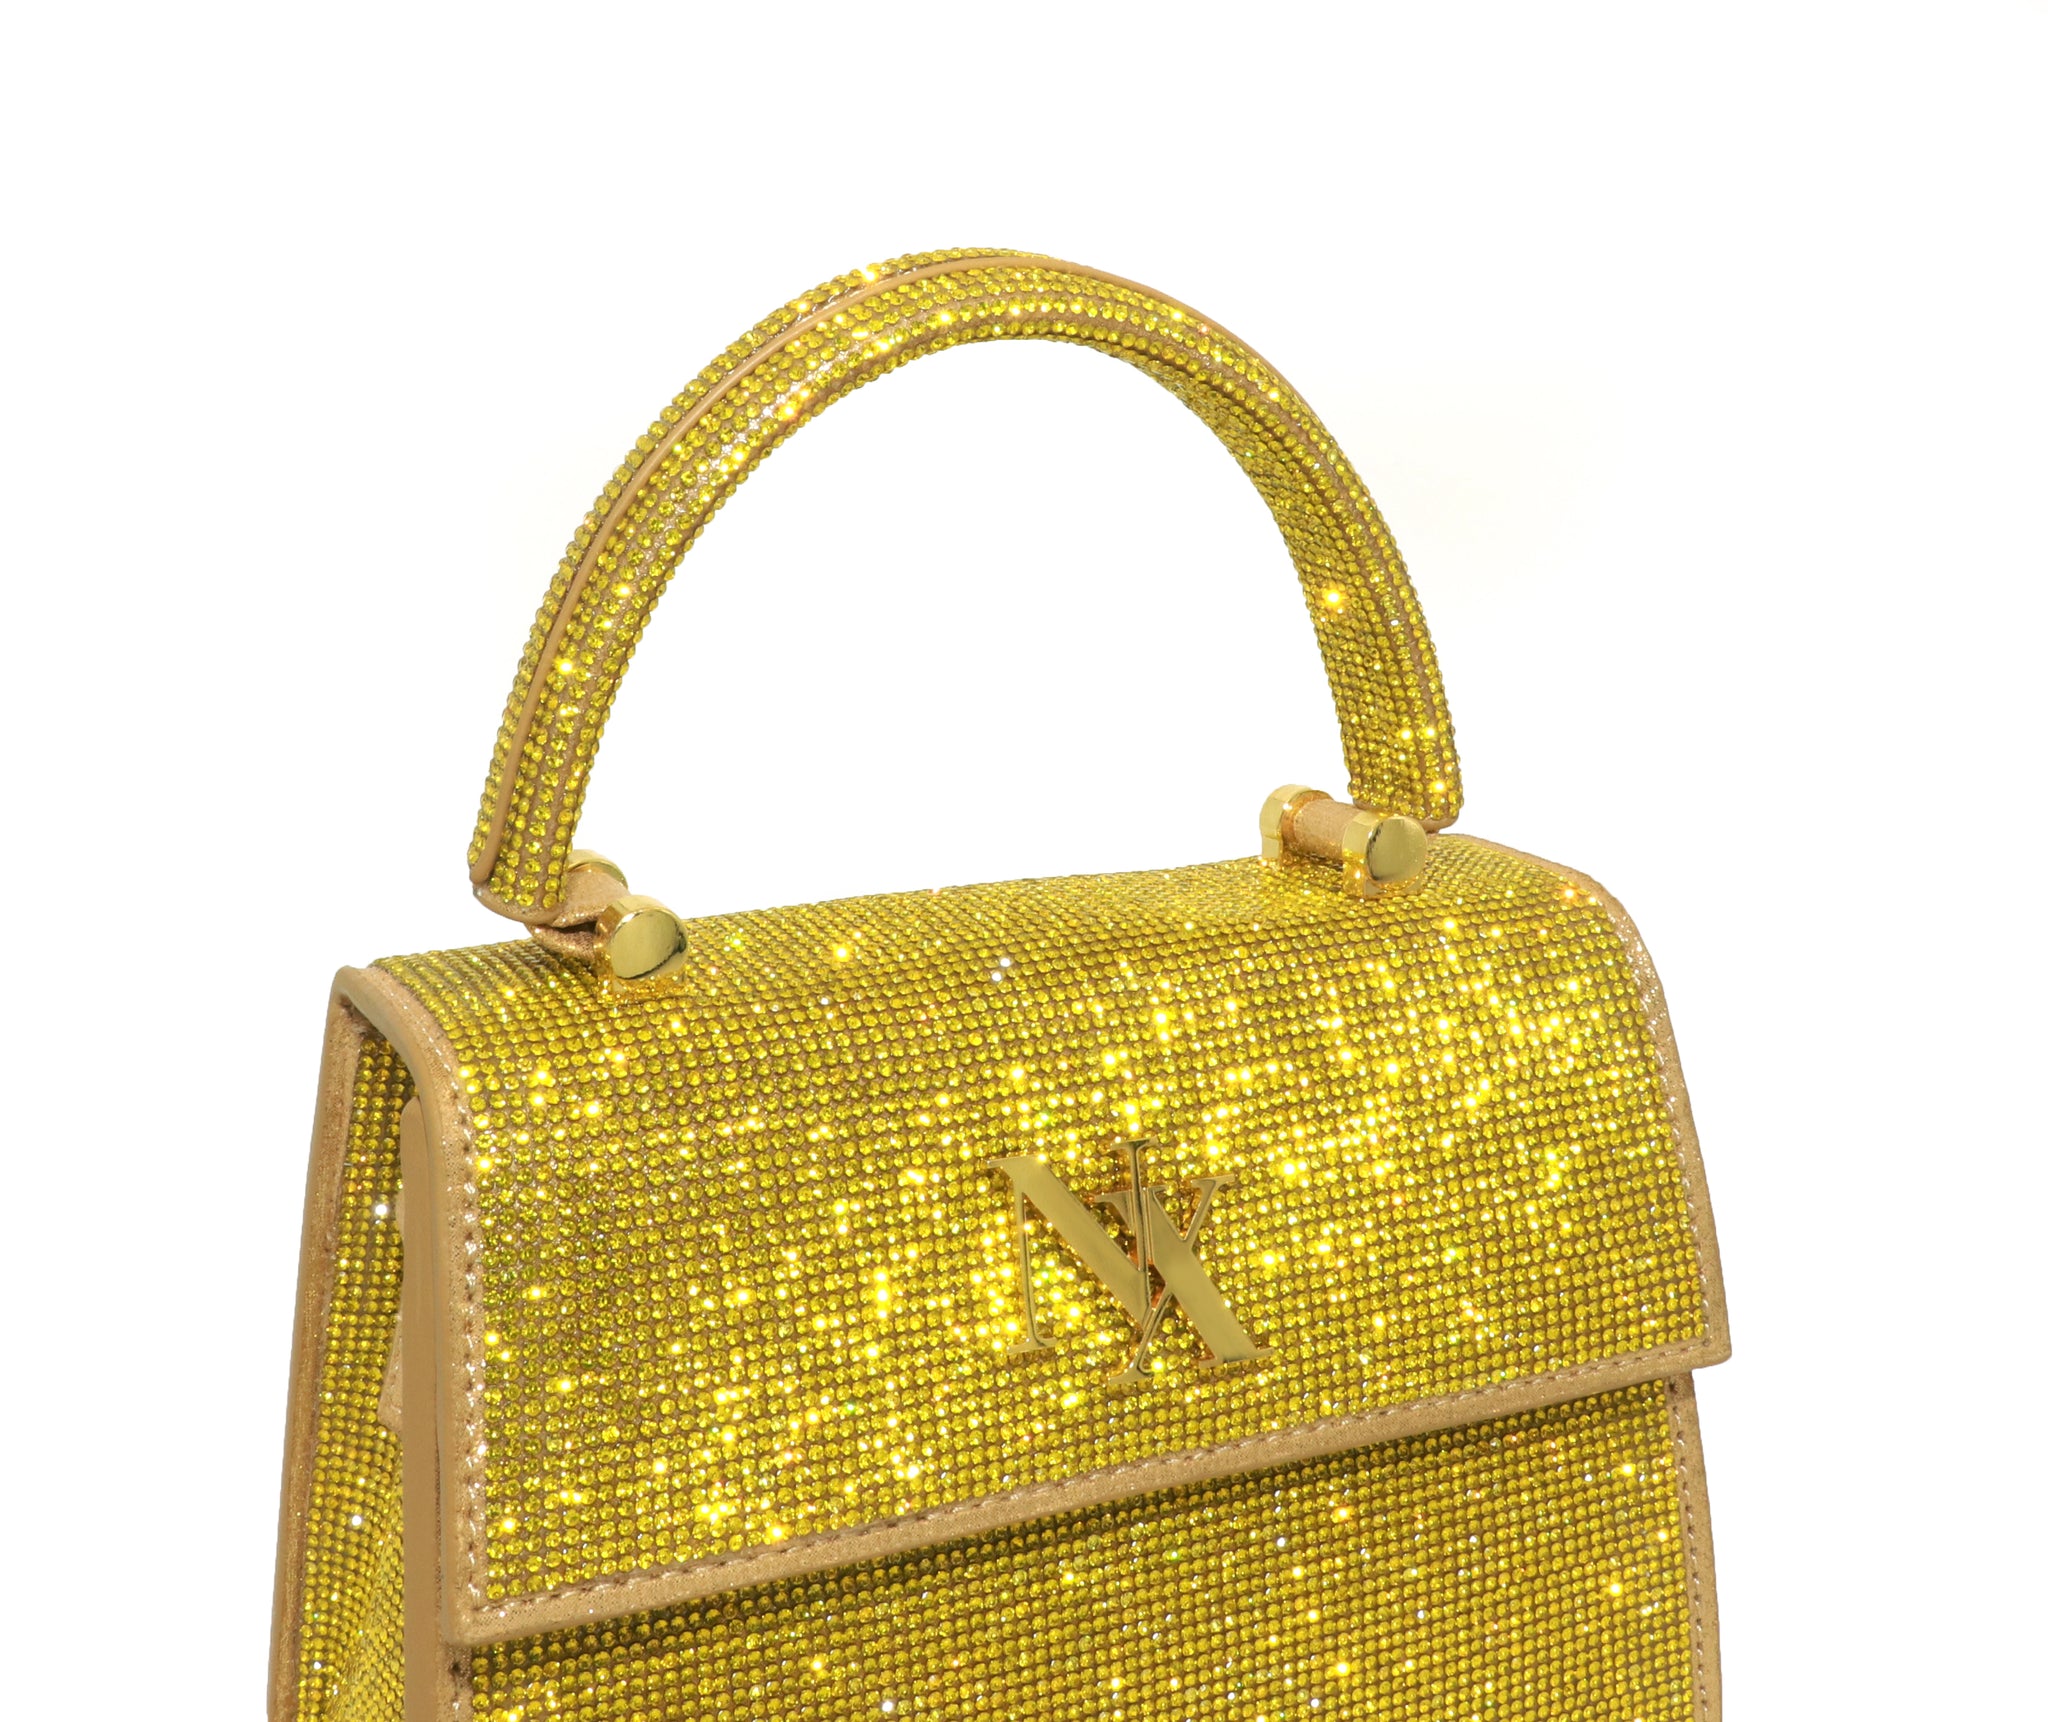 The diamond mini bag (canary yellow gold) –